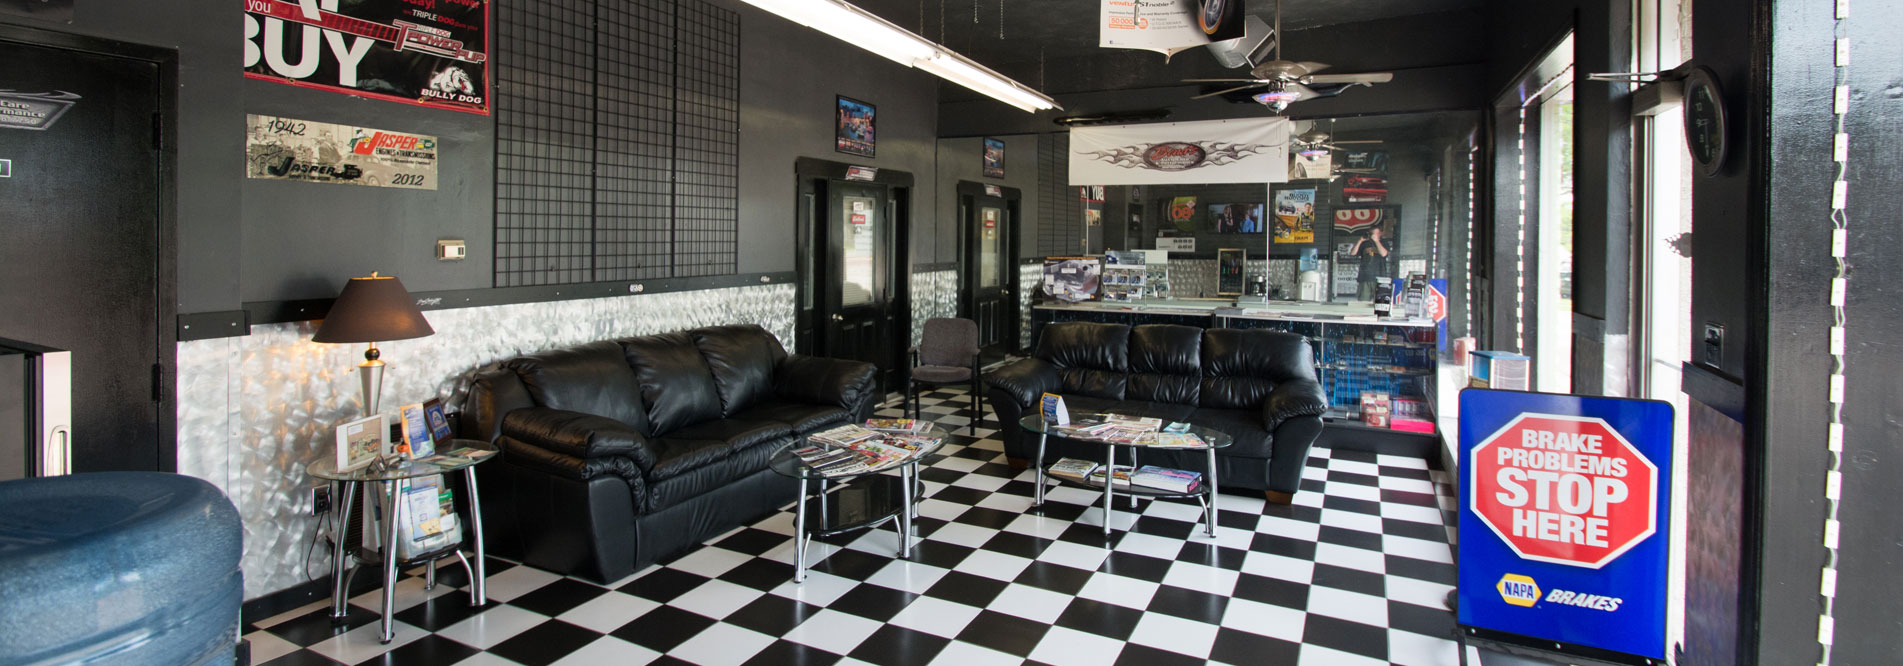 Bond's Auto Care & Performance mechanic shop interior